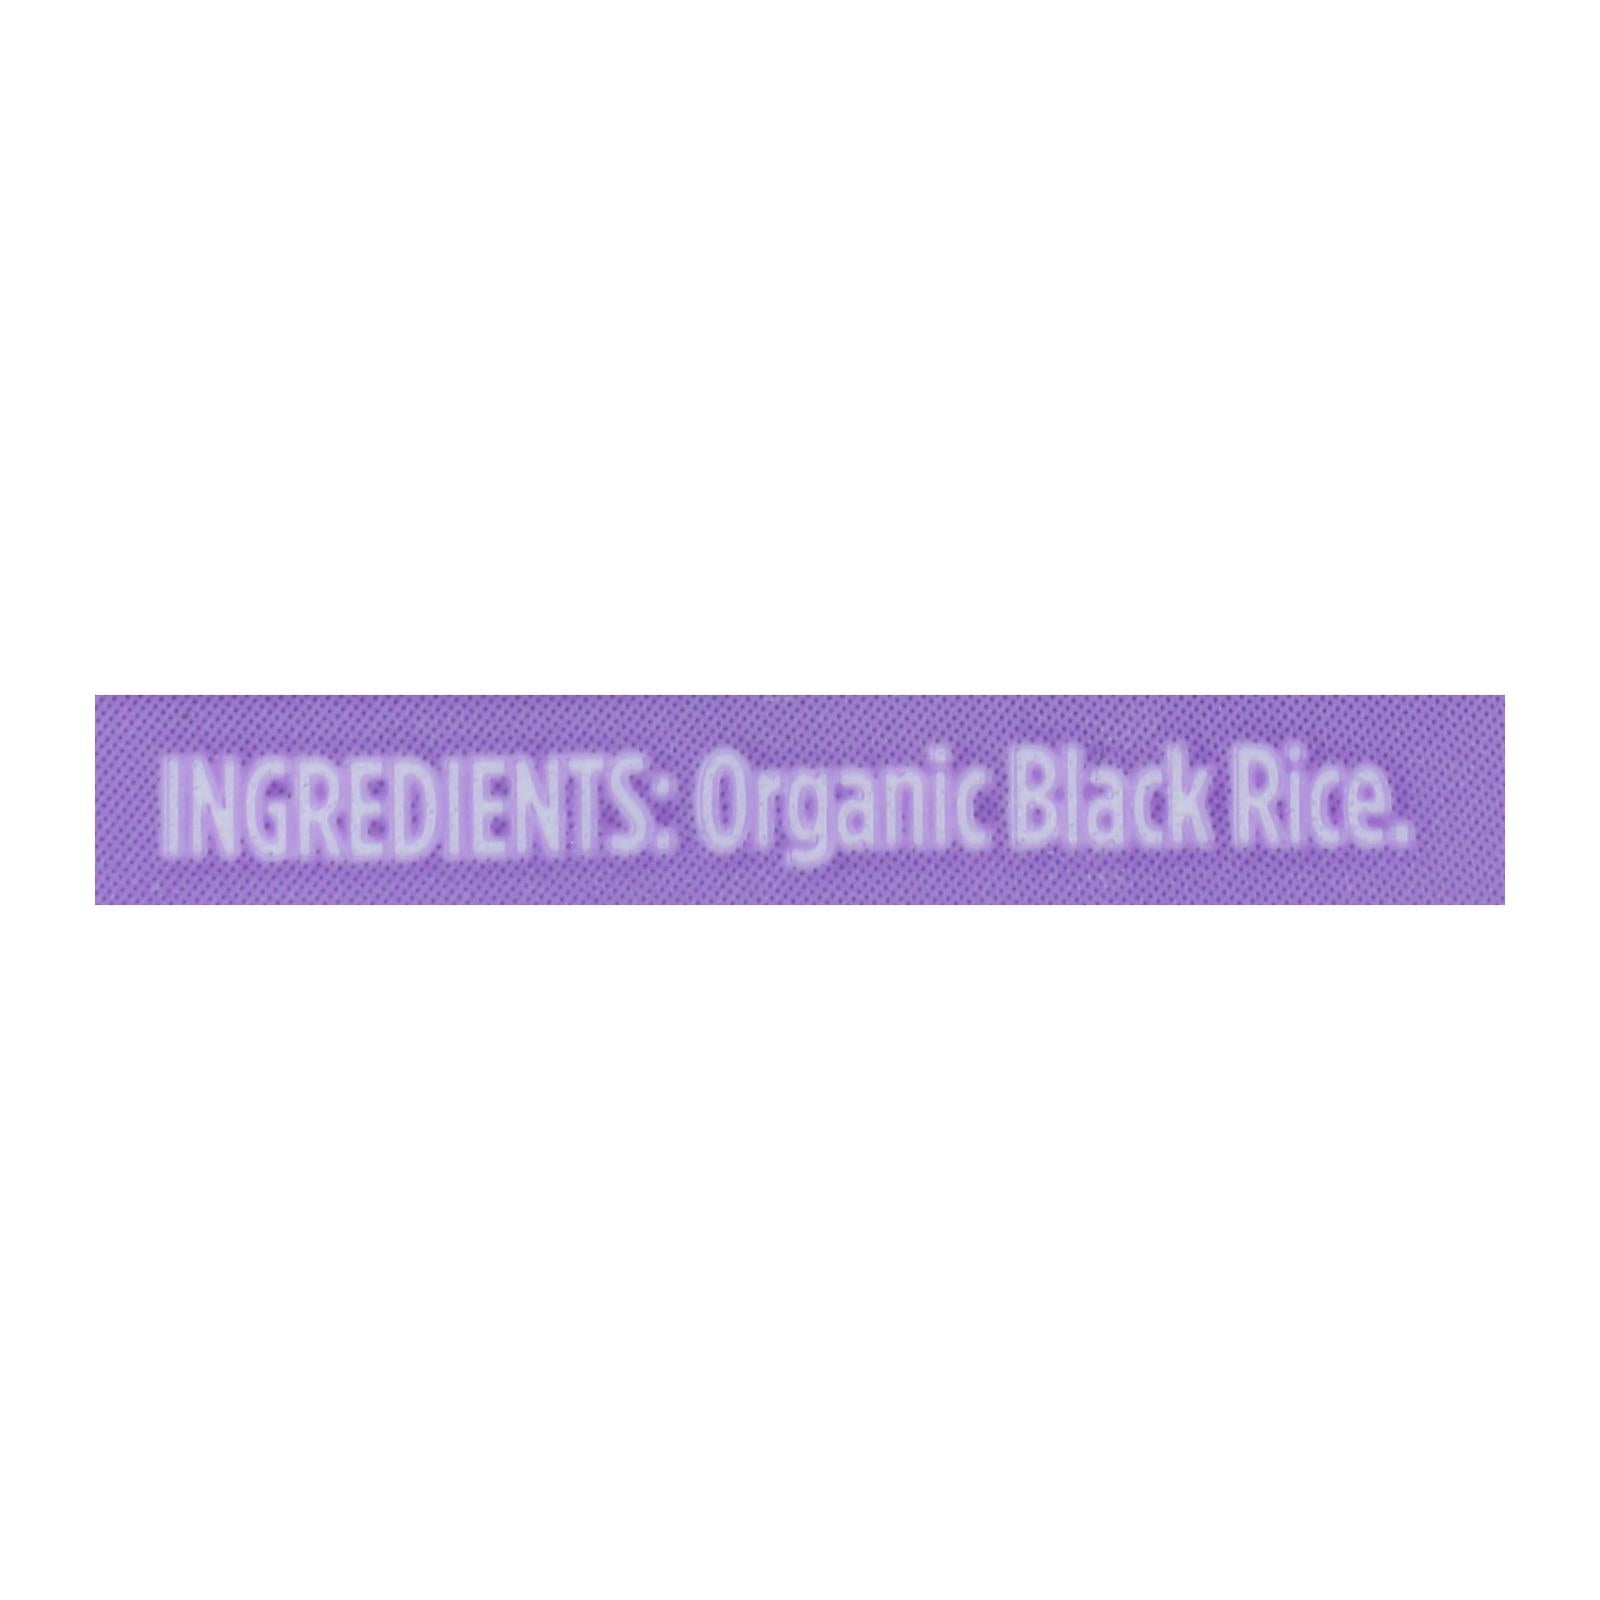 Lundberg Family Farms Organic Rice - Black Pearl - Case Of 6 - 1 Lb.